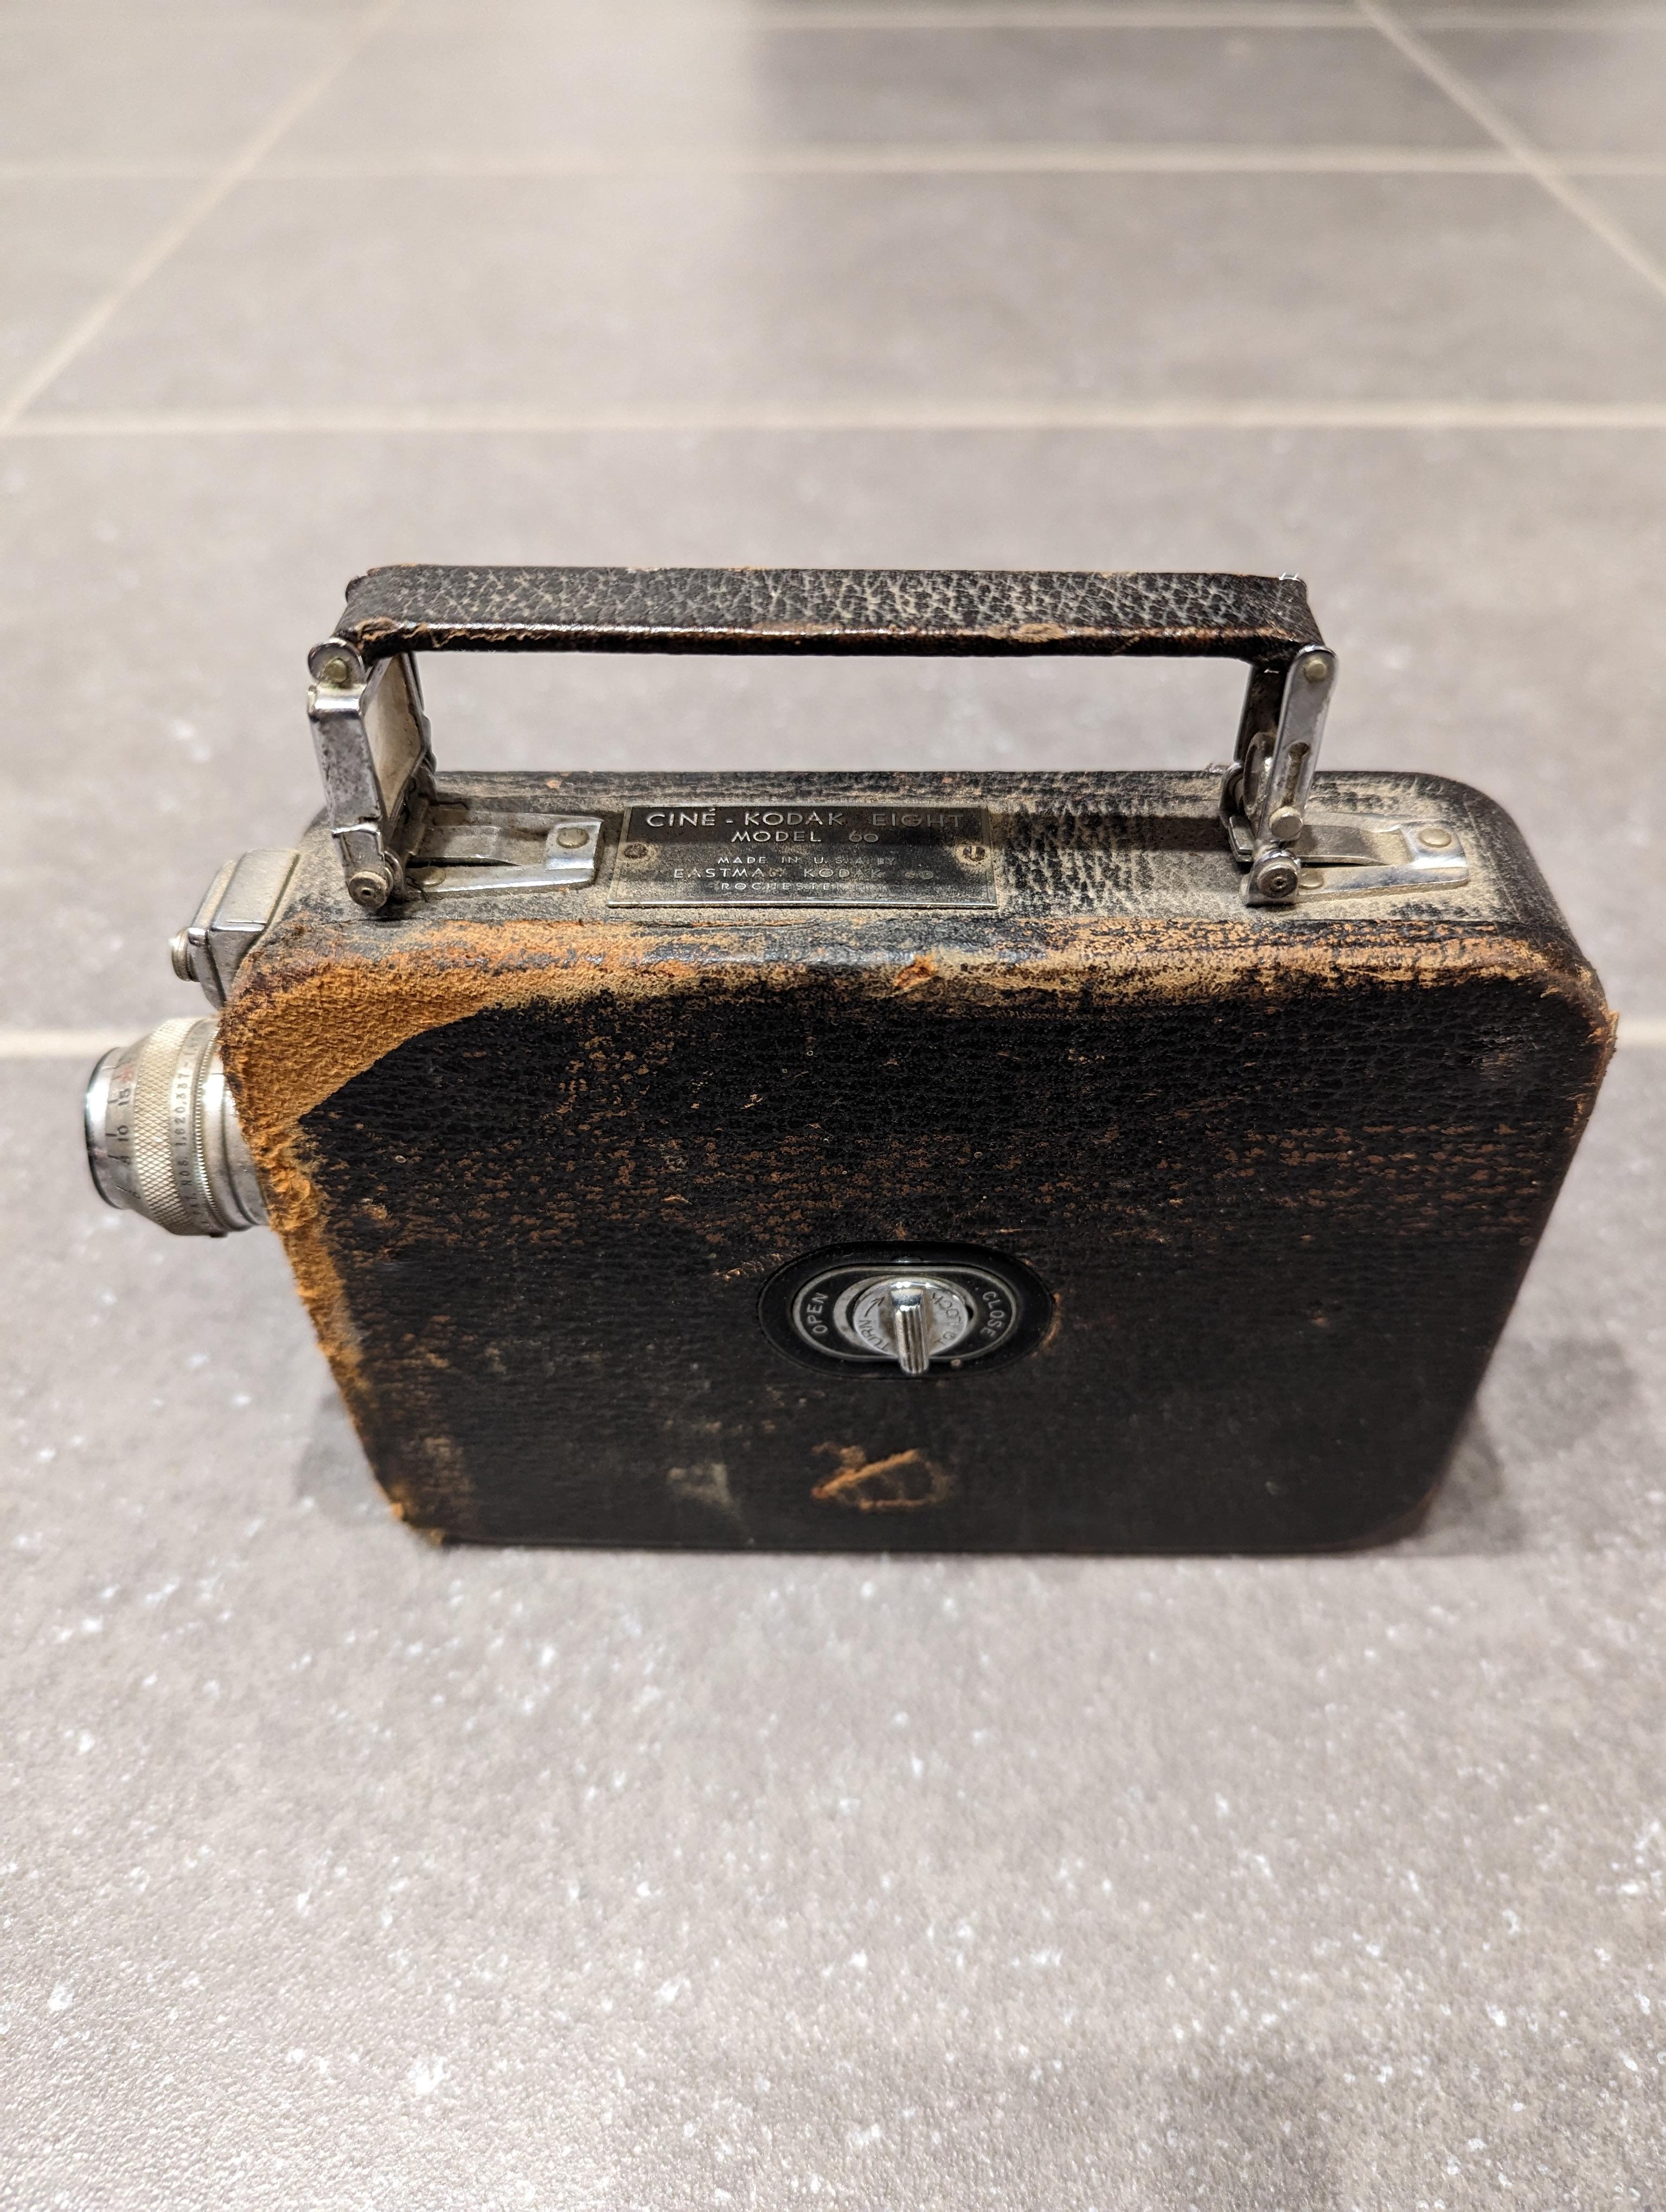 Vintage 1920 Kodak 8mm camera.

Poor condition, well-used. Interesting decorative piece.